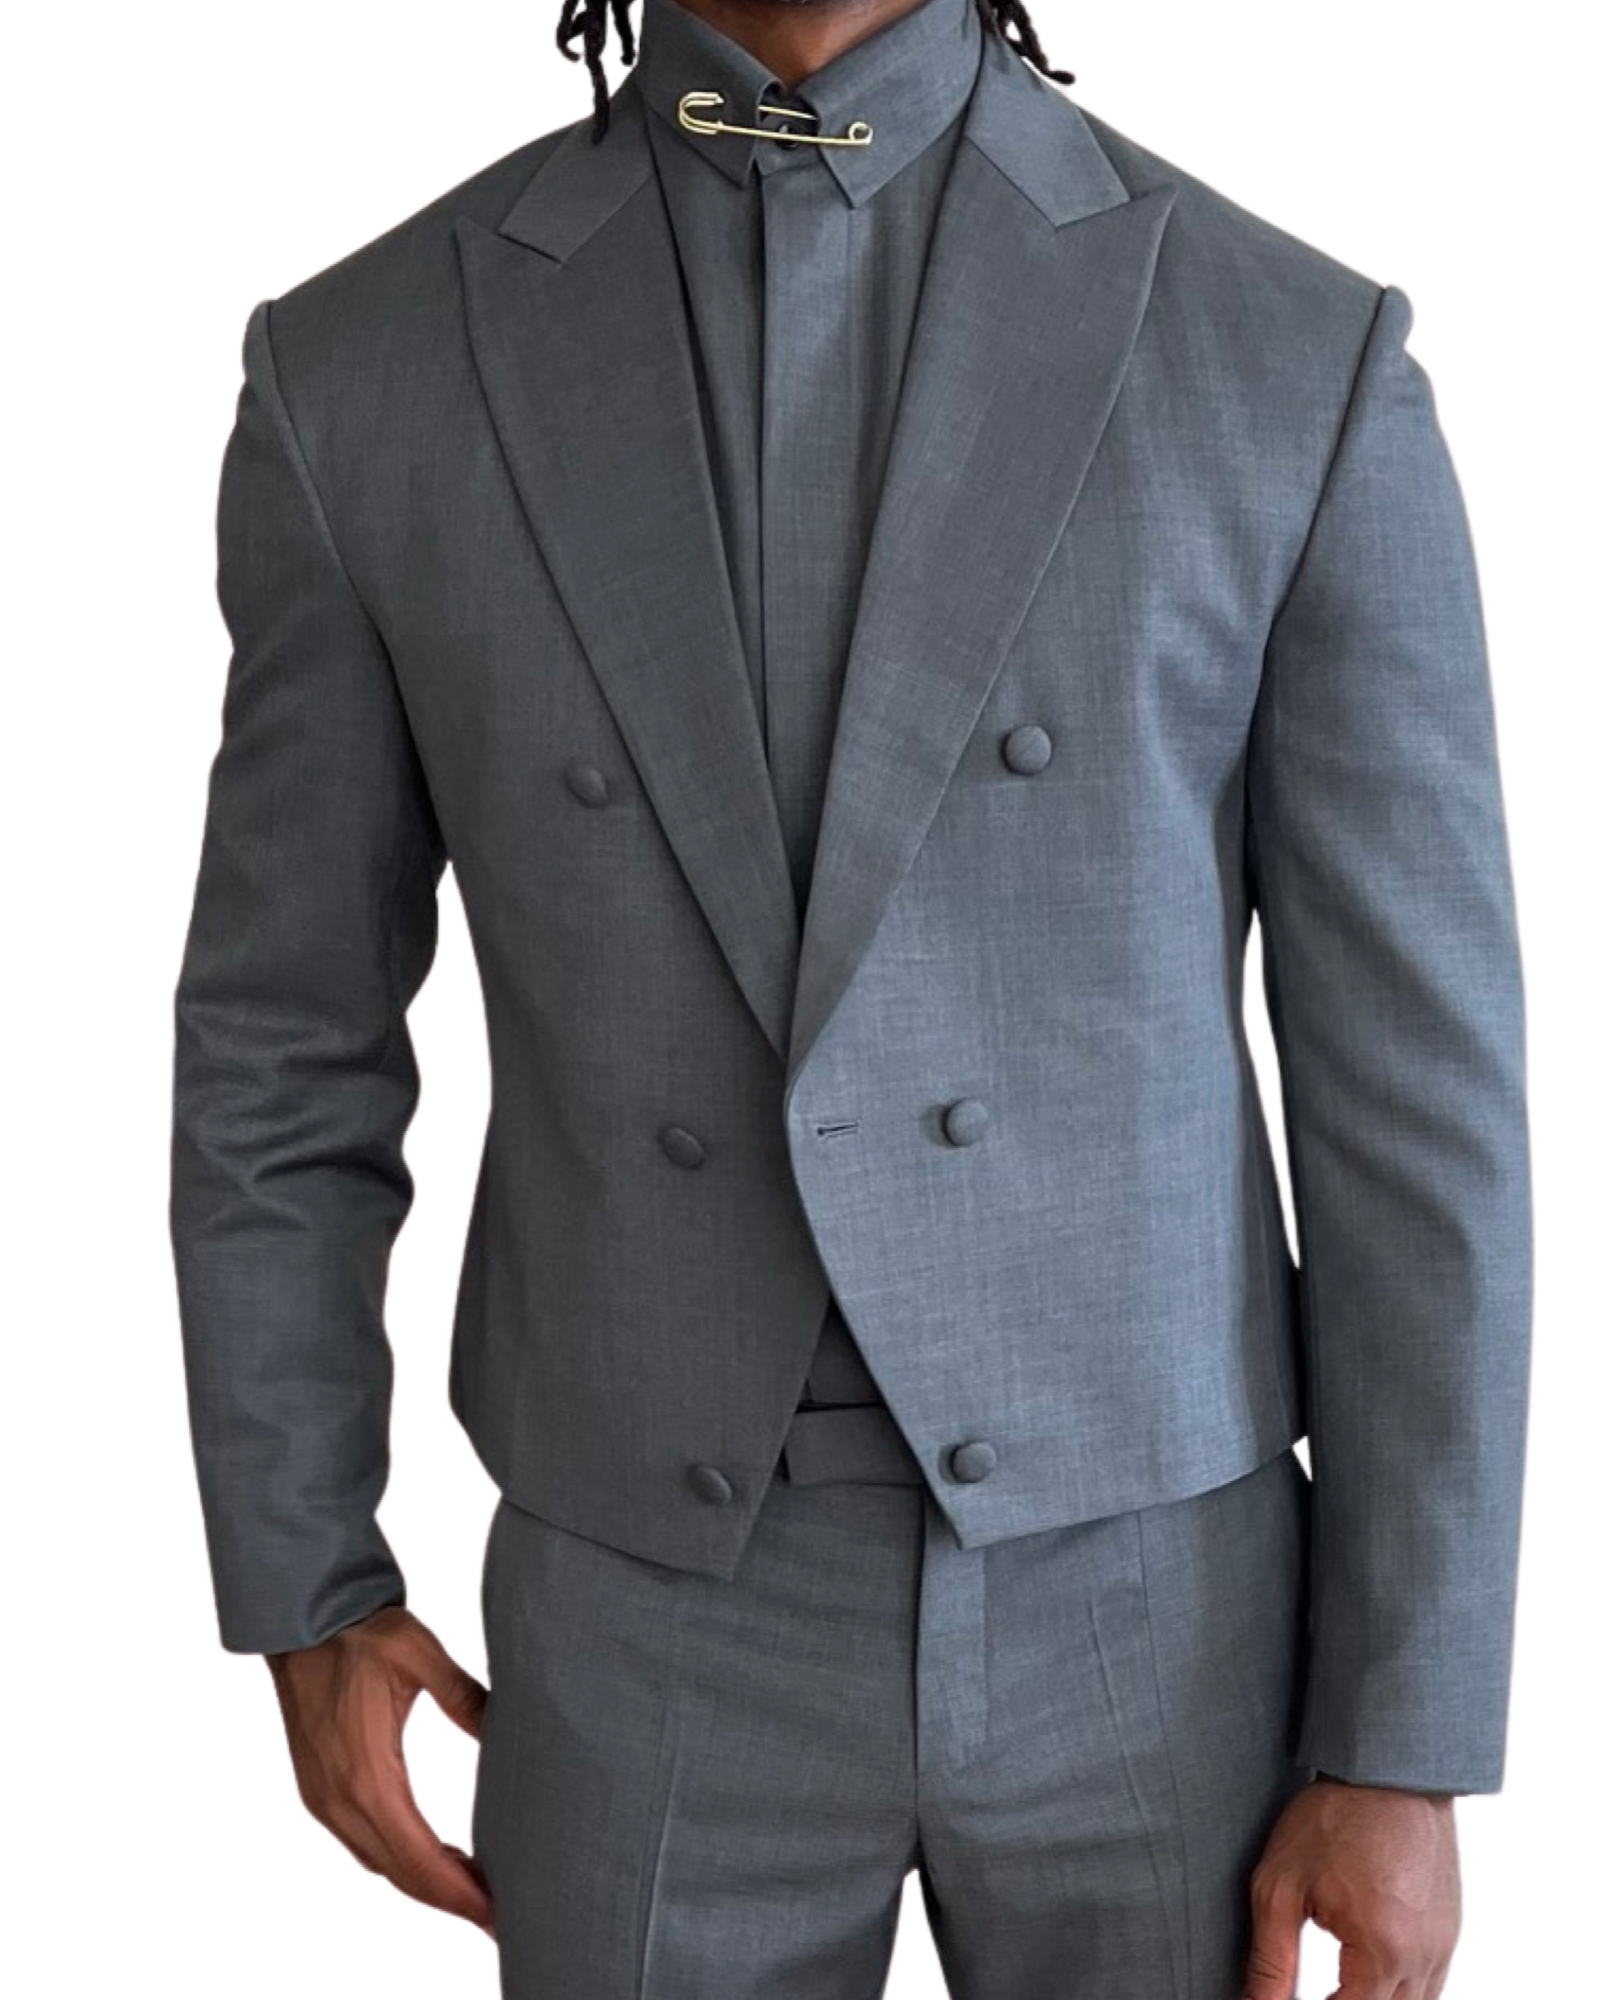 Cropped Kilt skort suit (3 piece)